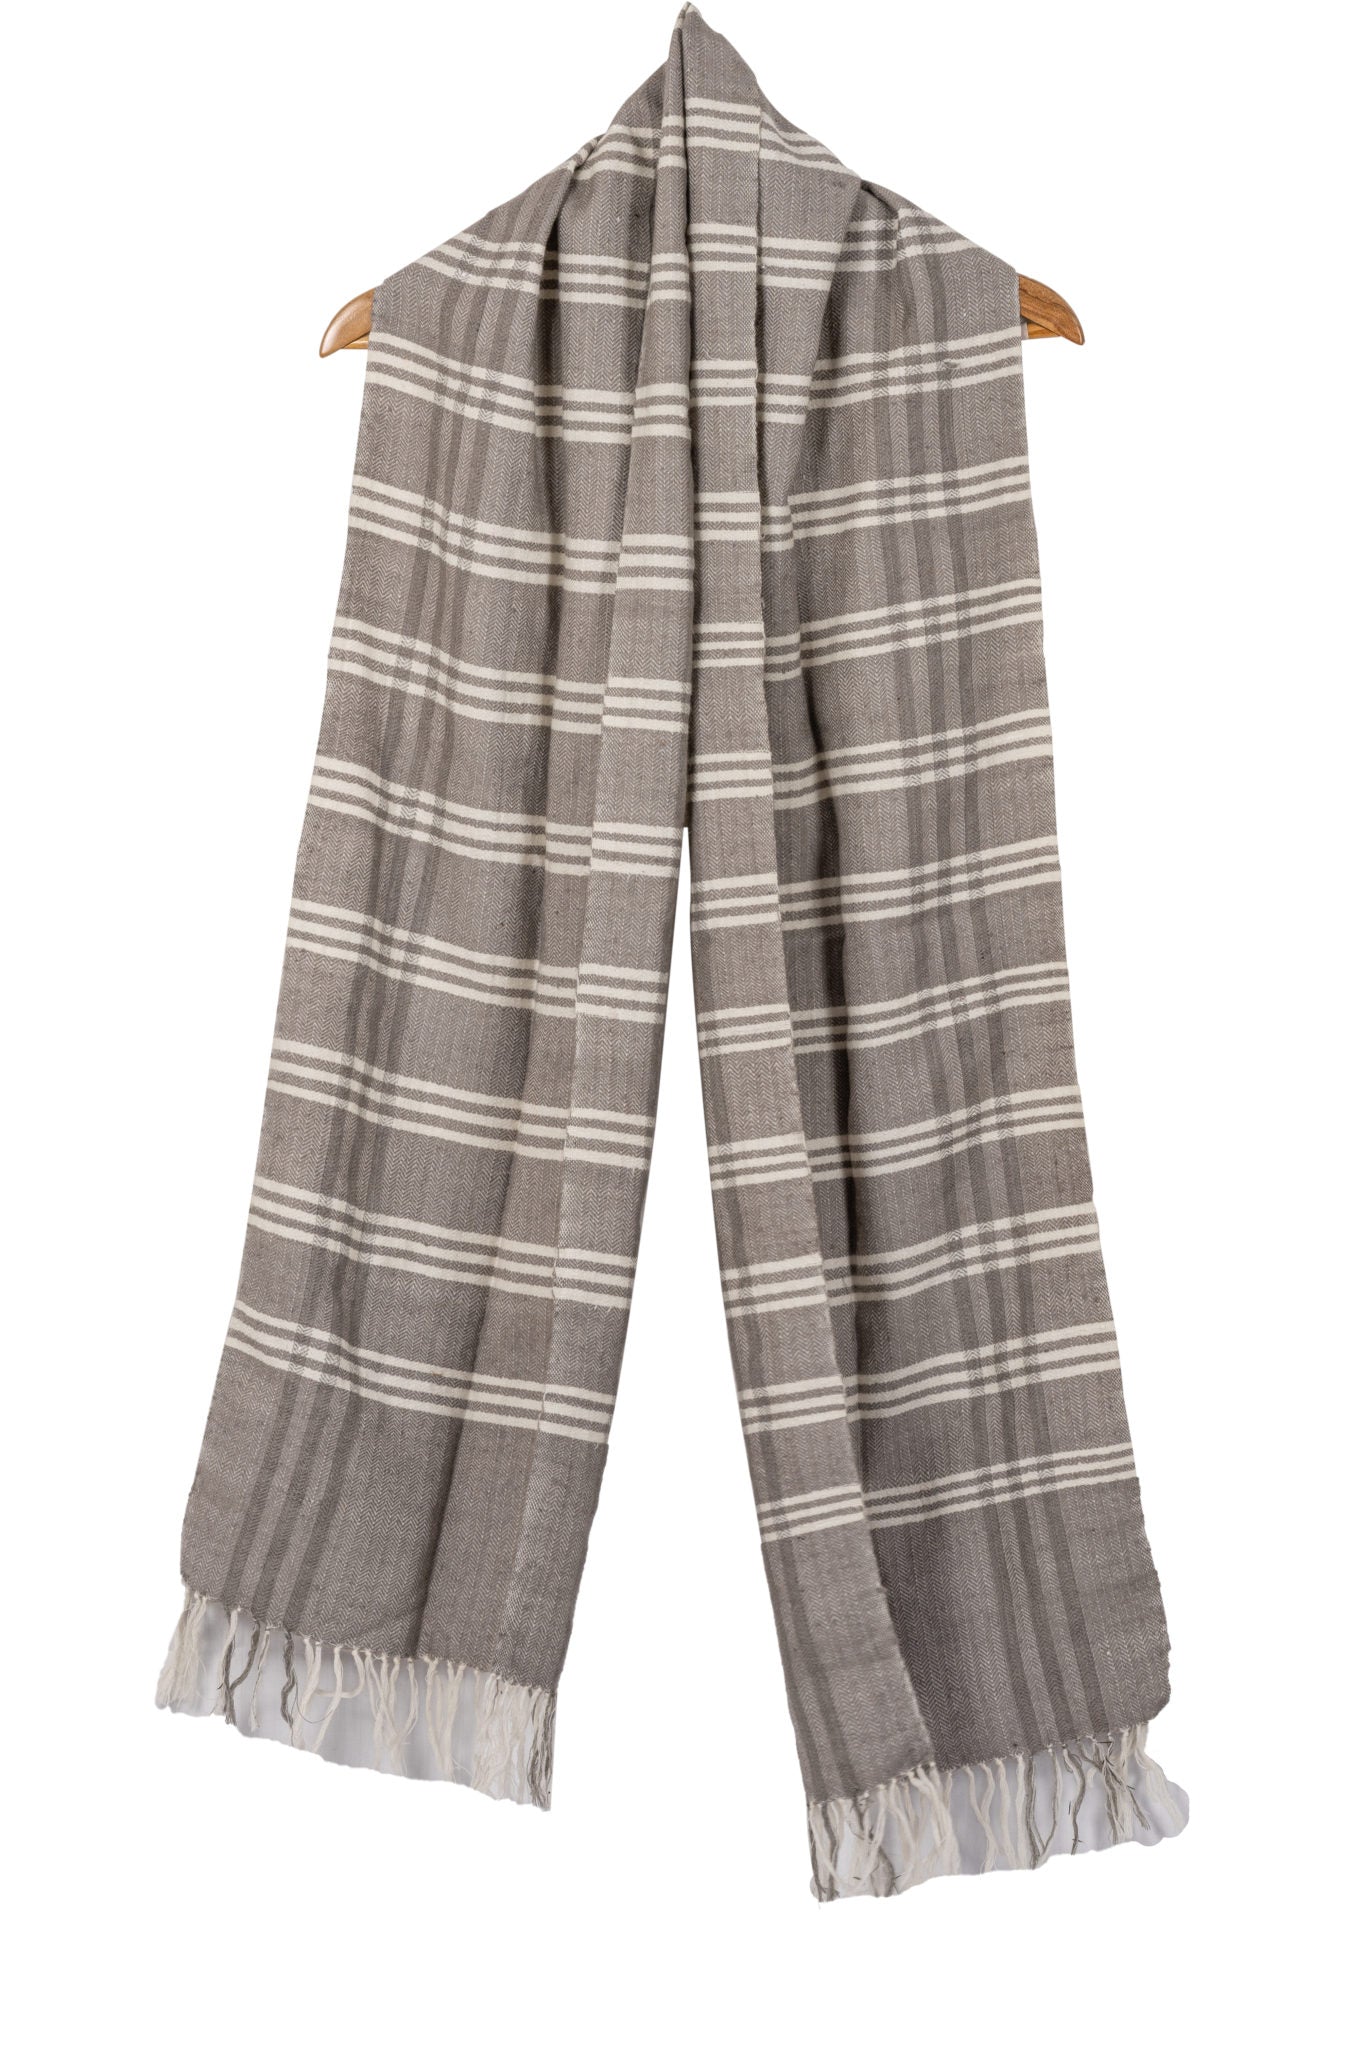 Angora wool muffler - Brown with white stripes